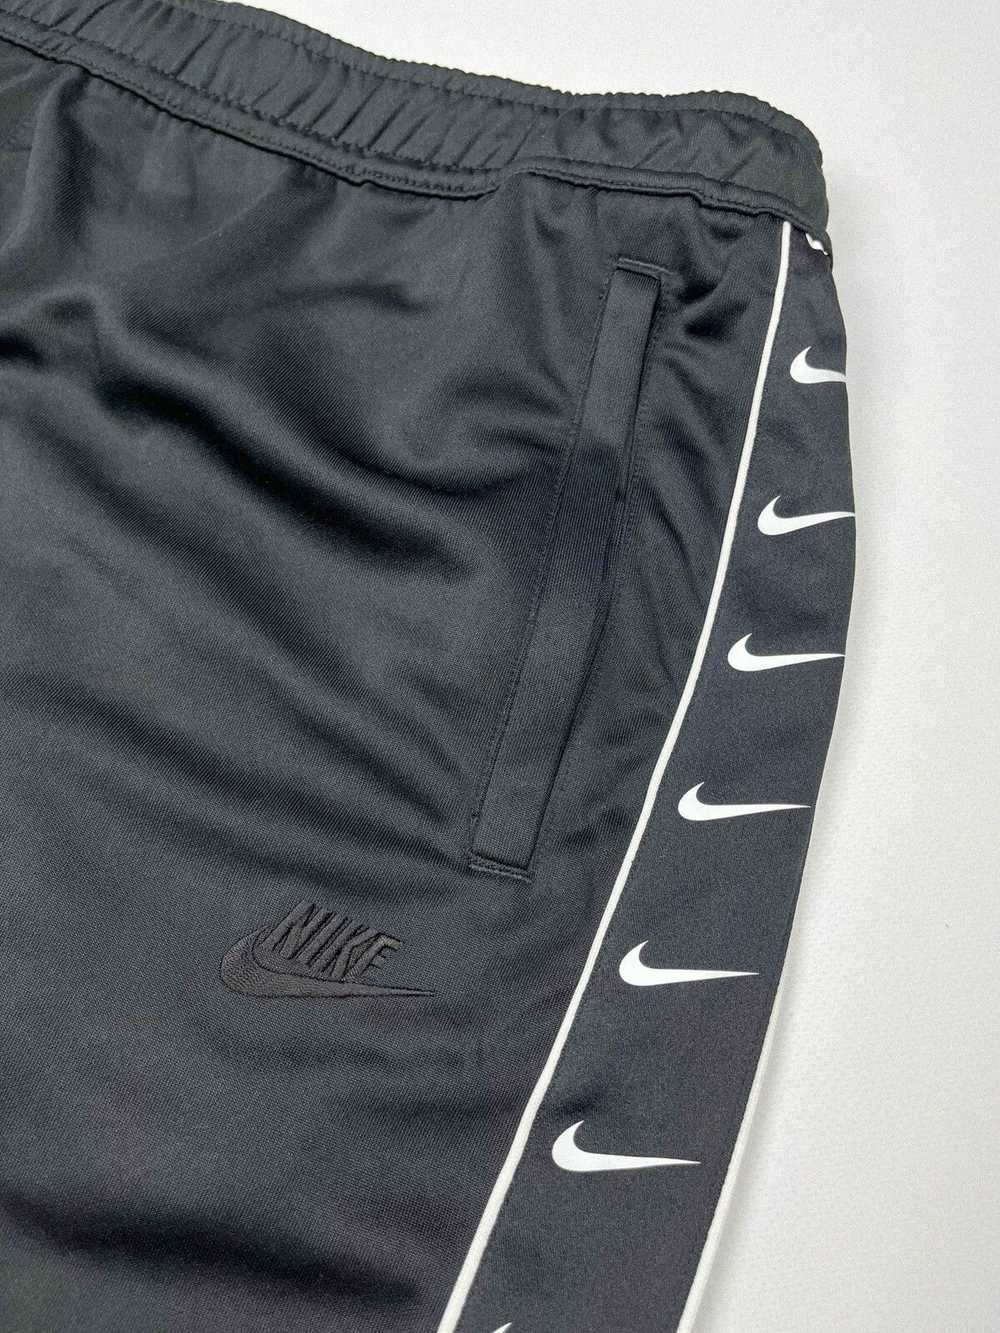 Nike Nike Trackpants Full Side Snap Pants 3XL - image 3